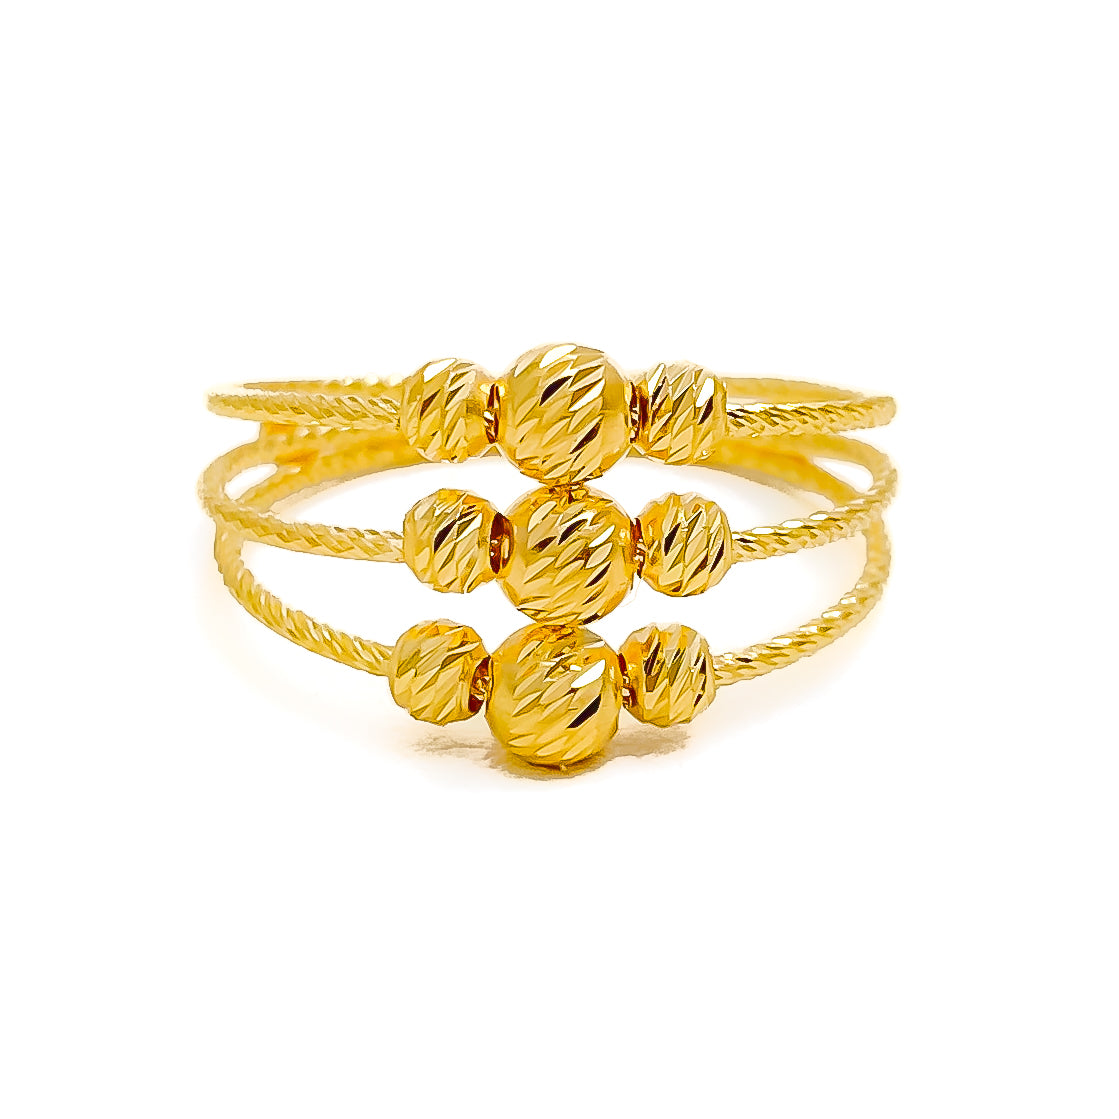 Rings for Women: Gold Rings, Stackable Sets, & More | gorjana